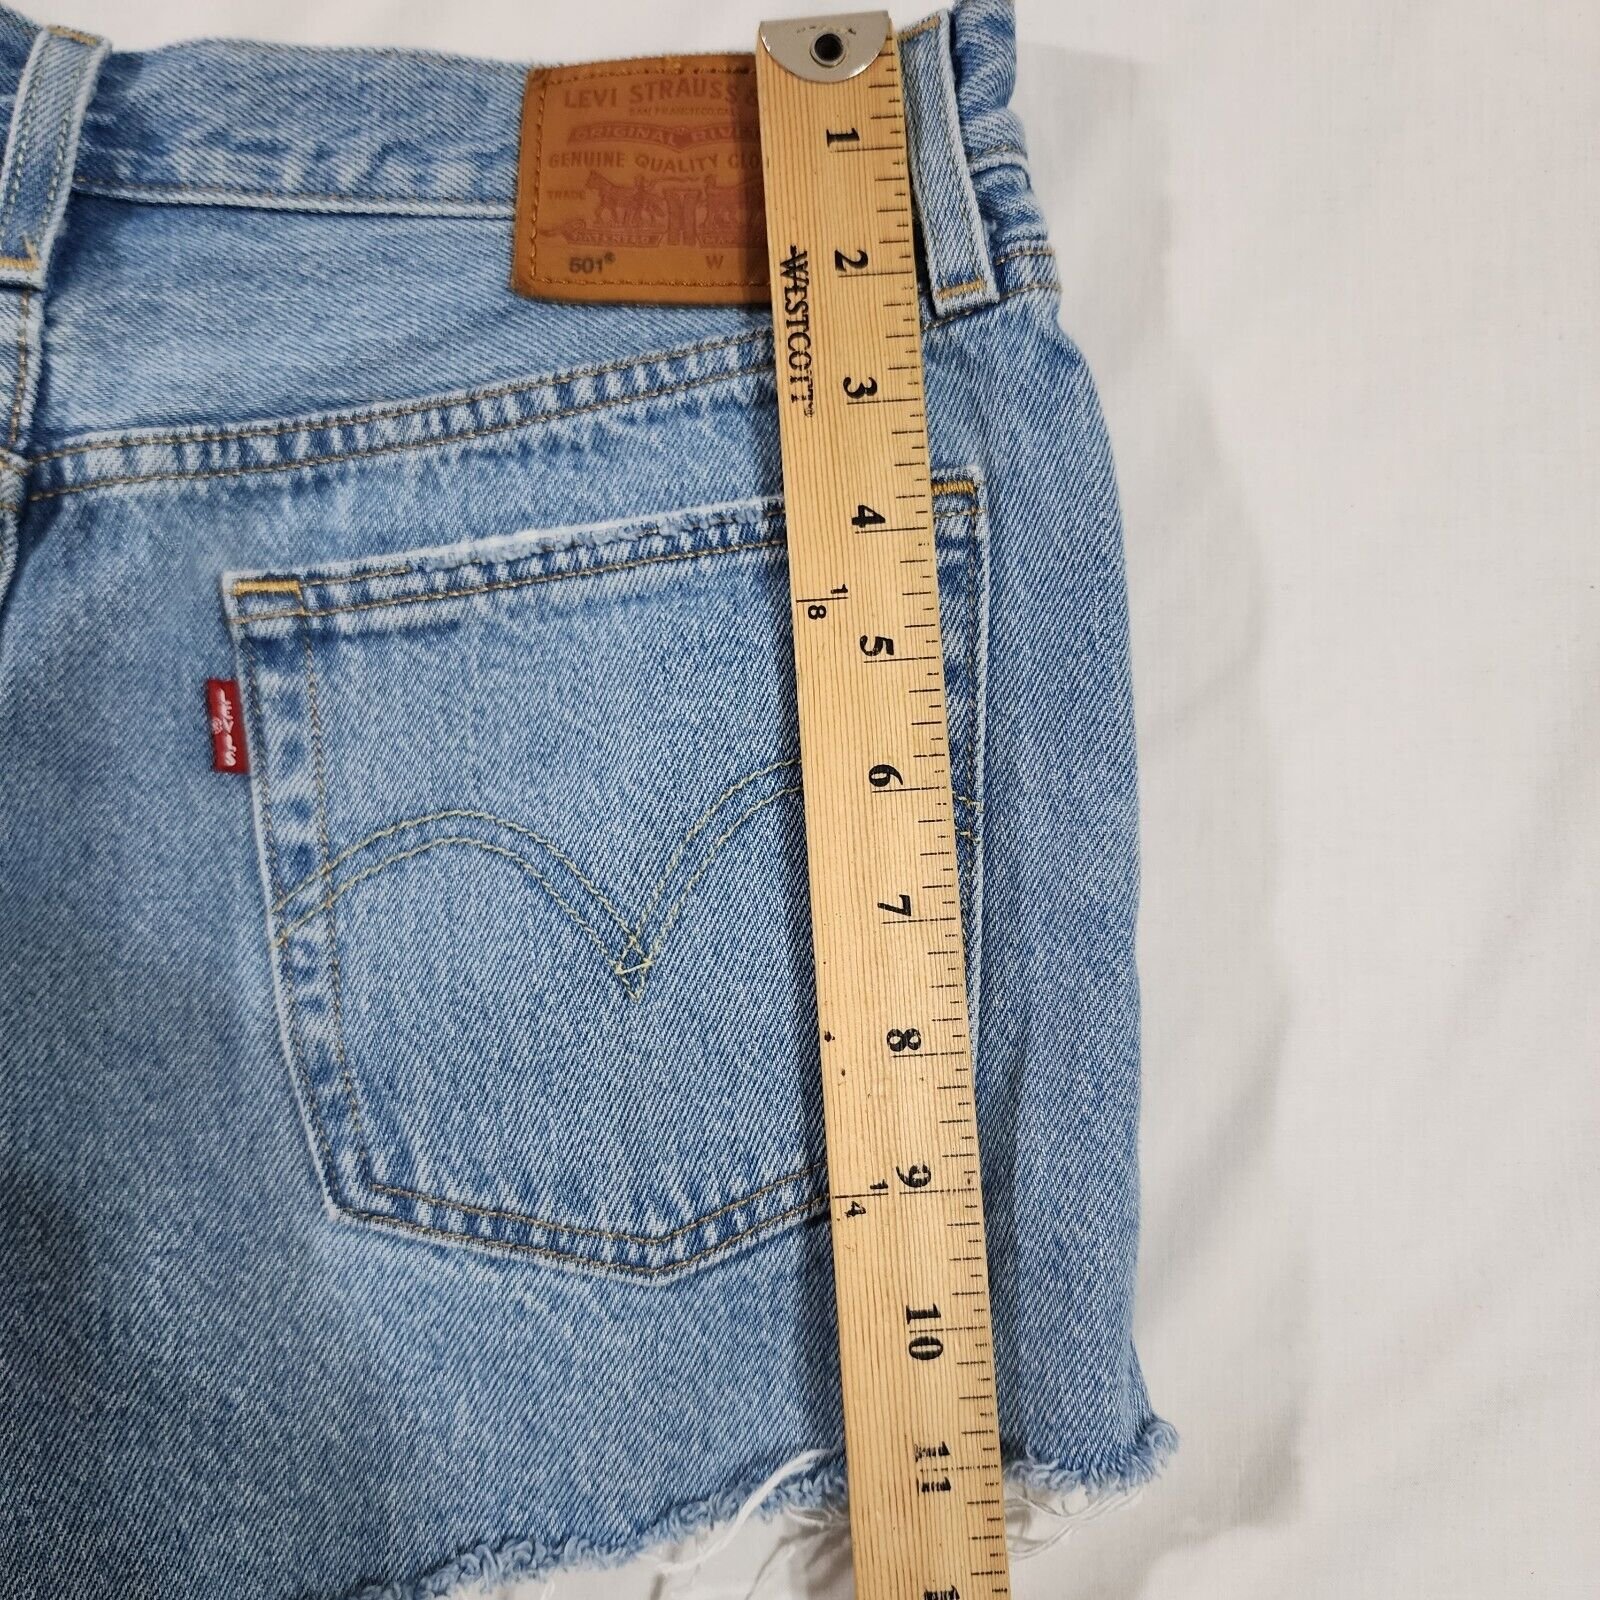 Vintage Levis 501 Jeans Faded Blue Medium Wash Distressed High 